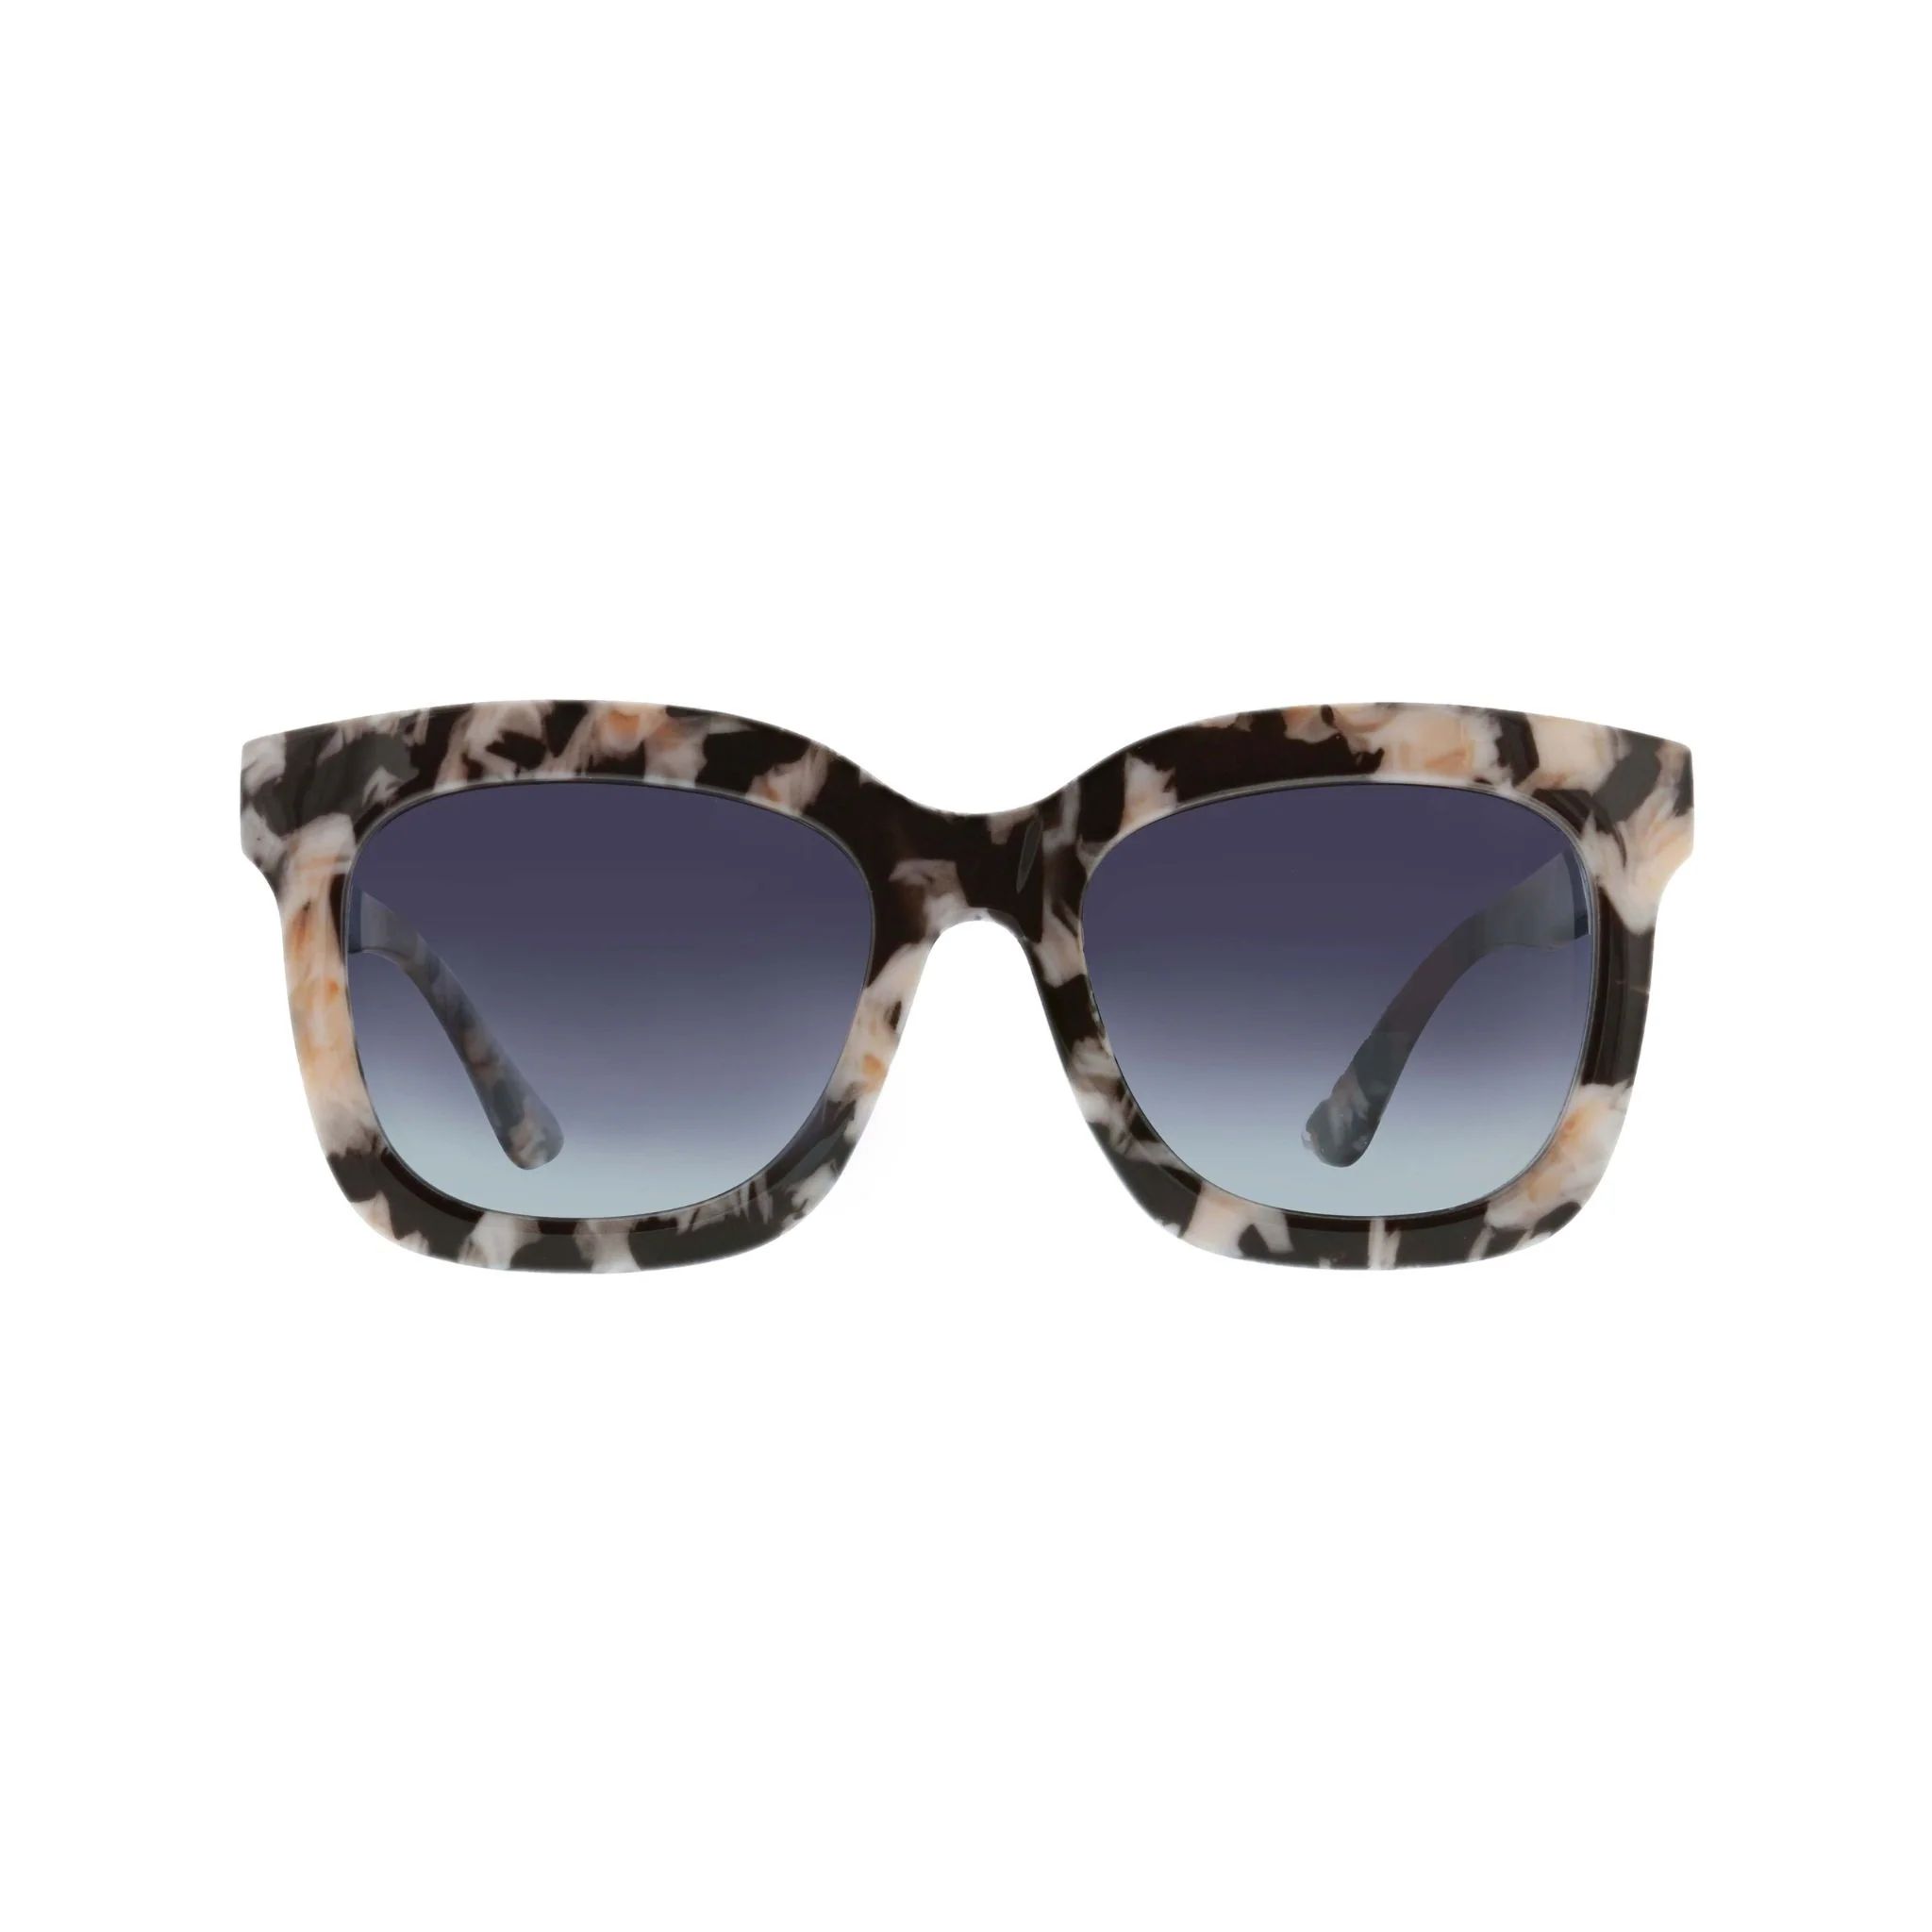 Weekender (Sunglasses) - Black Marble / No Correction / None - Peepers by PeeperSpecs | Peepers